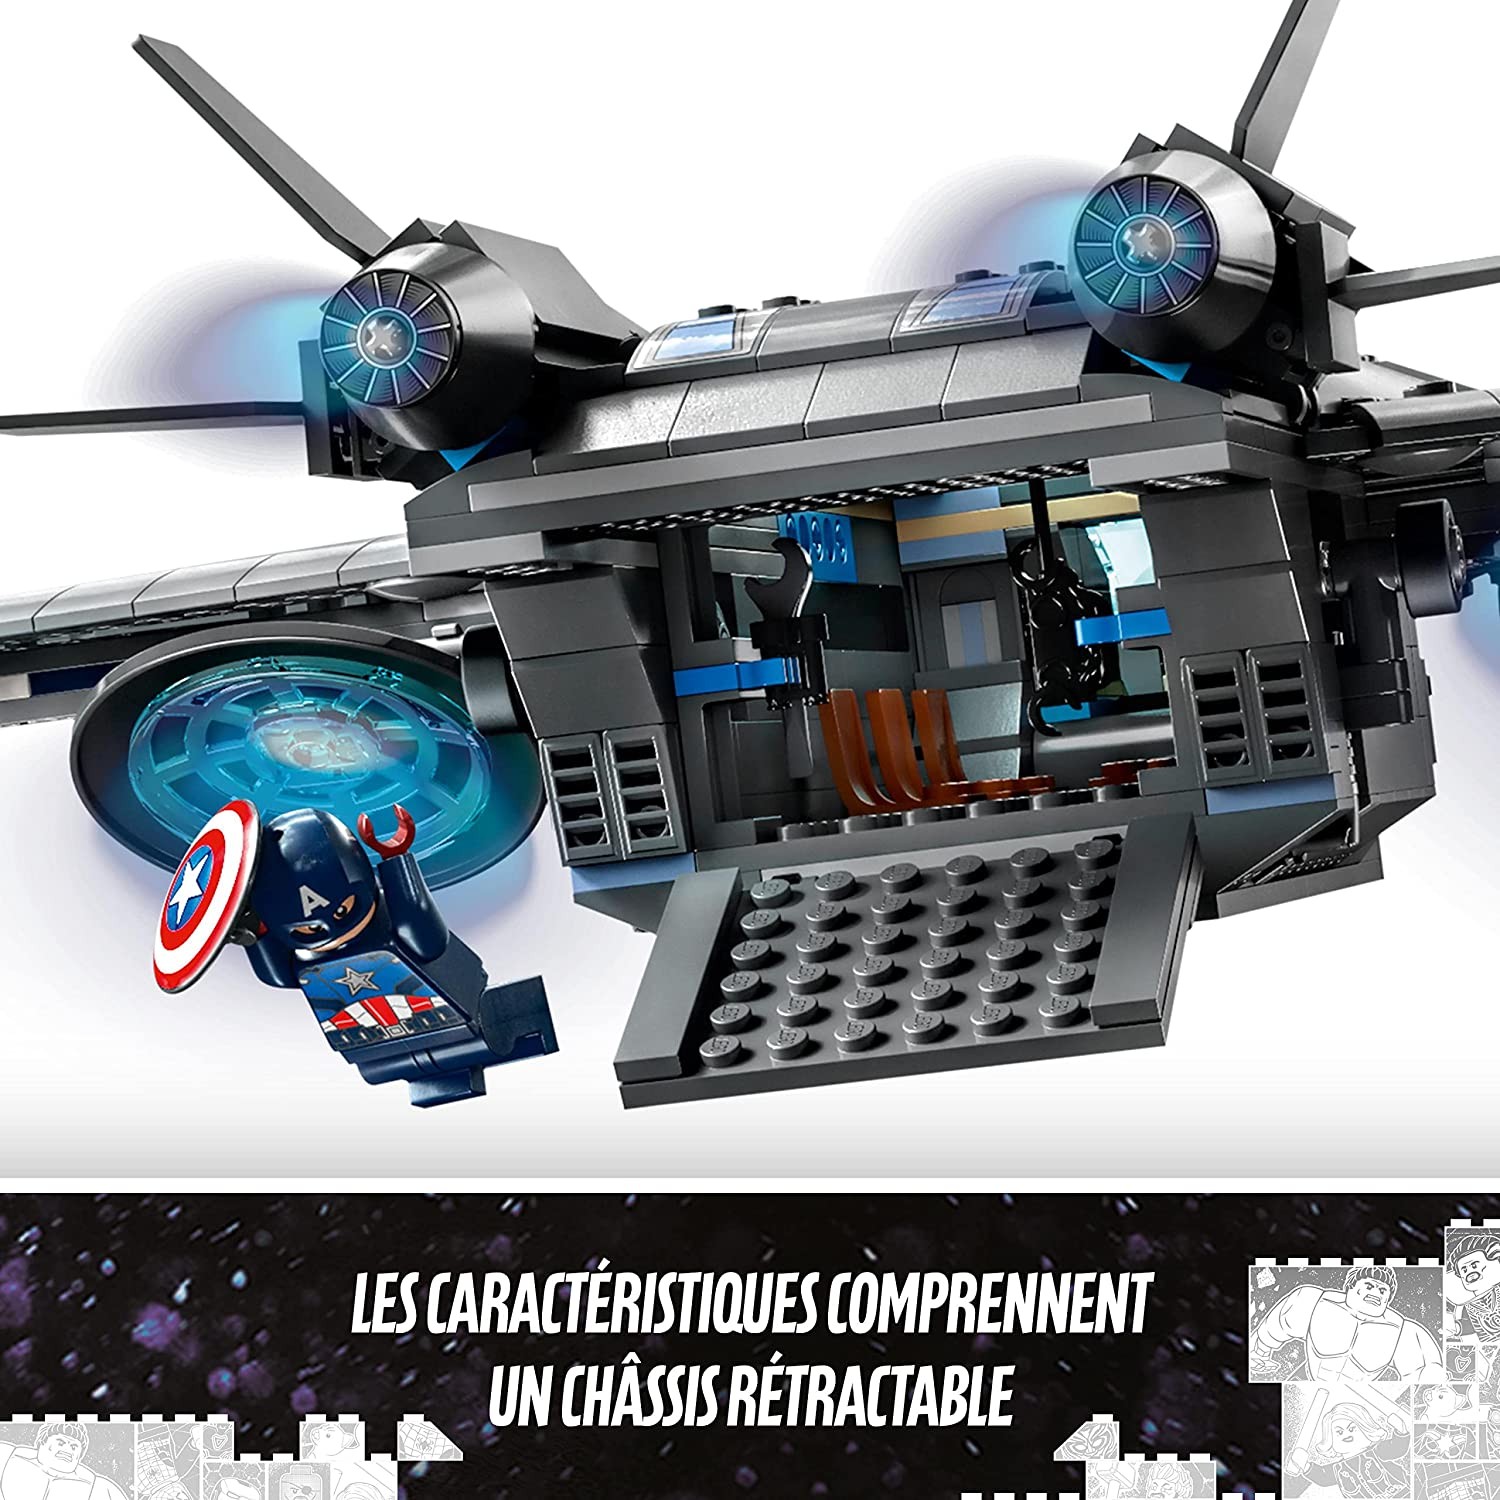 Lego Marvel - Les Personnages 1/3 